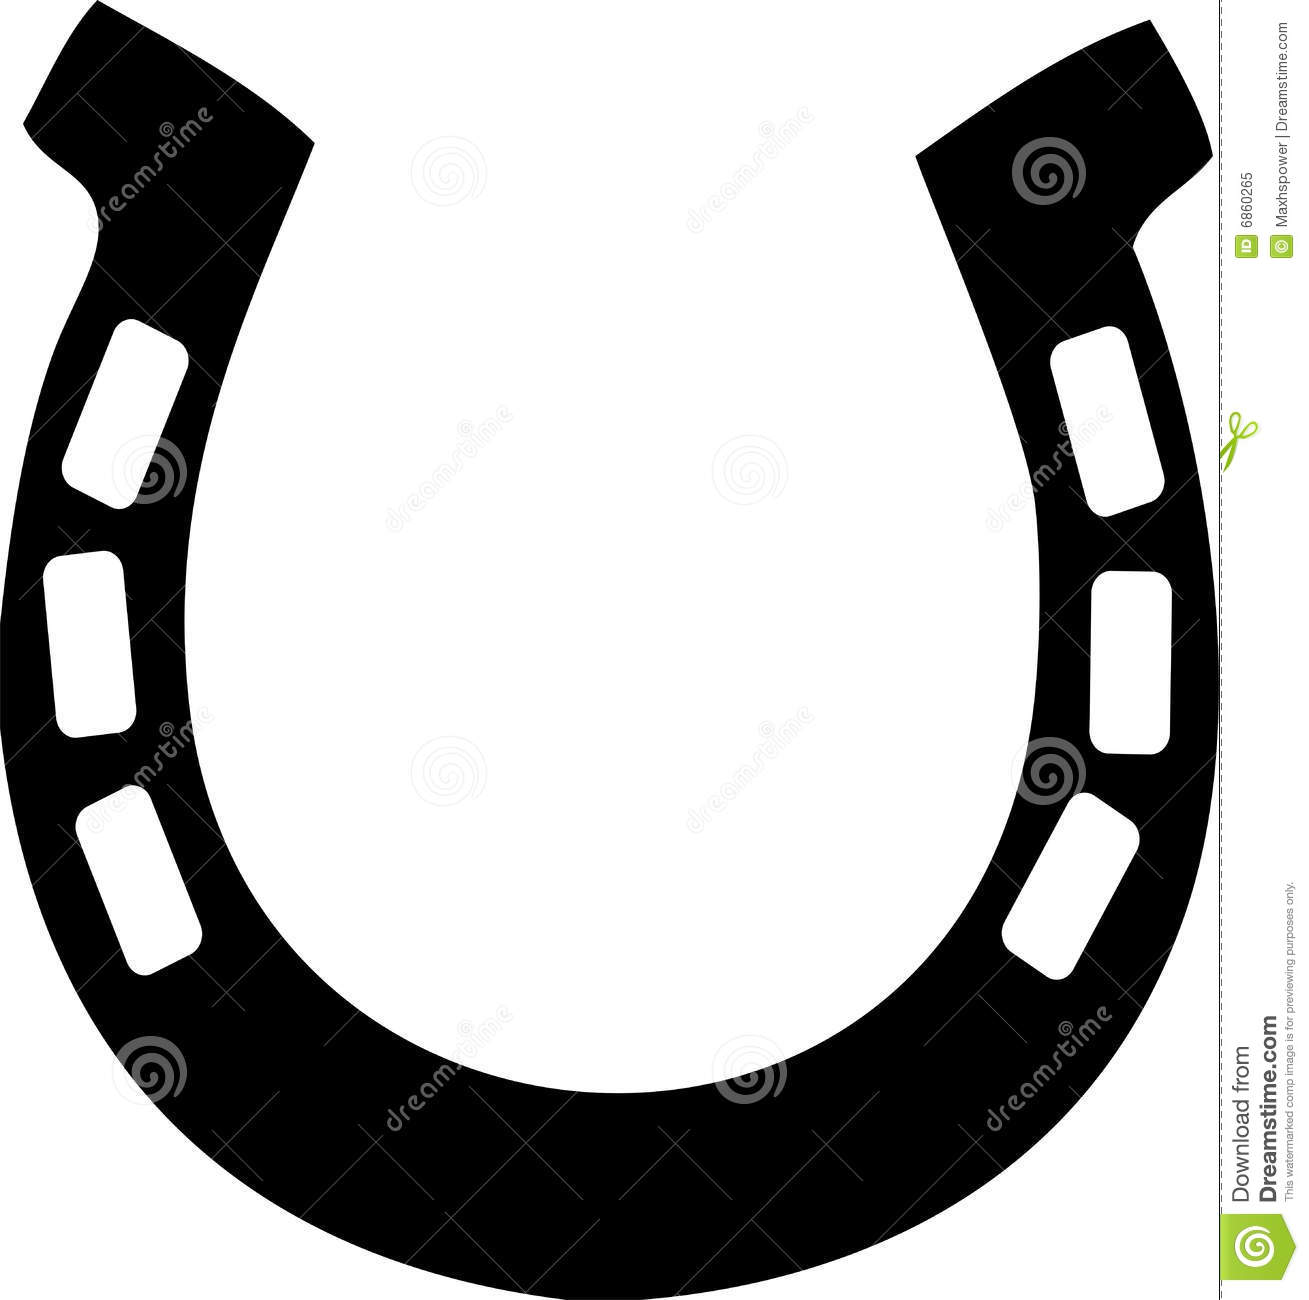 Double horseshoe clipart the 